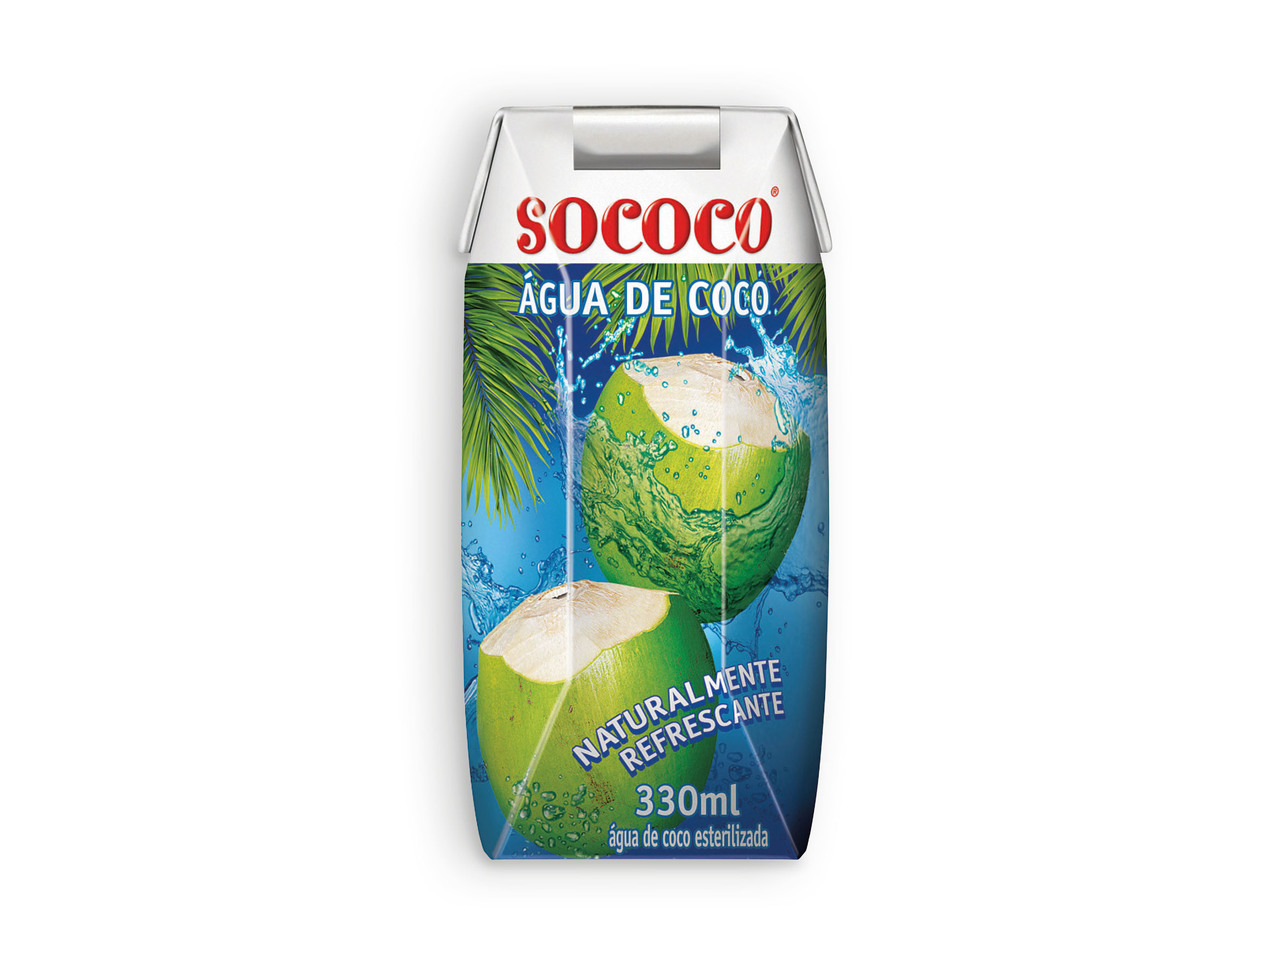 SOCOCO(R) Água de Coco